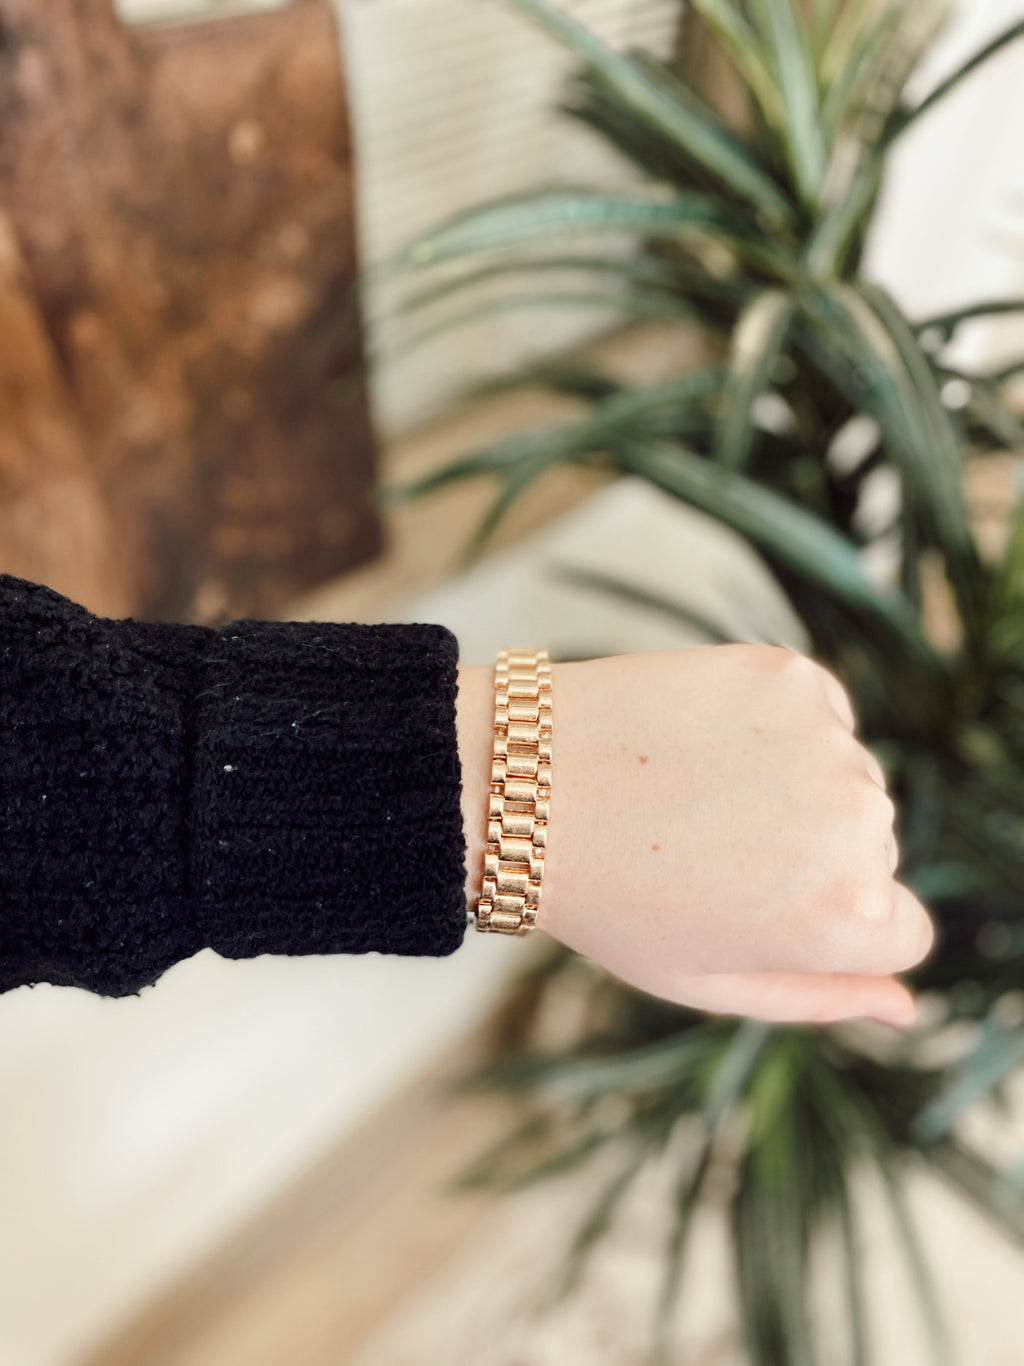 Gold Watch Band Textured Stretch Bracelet